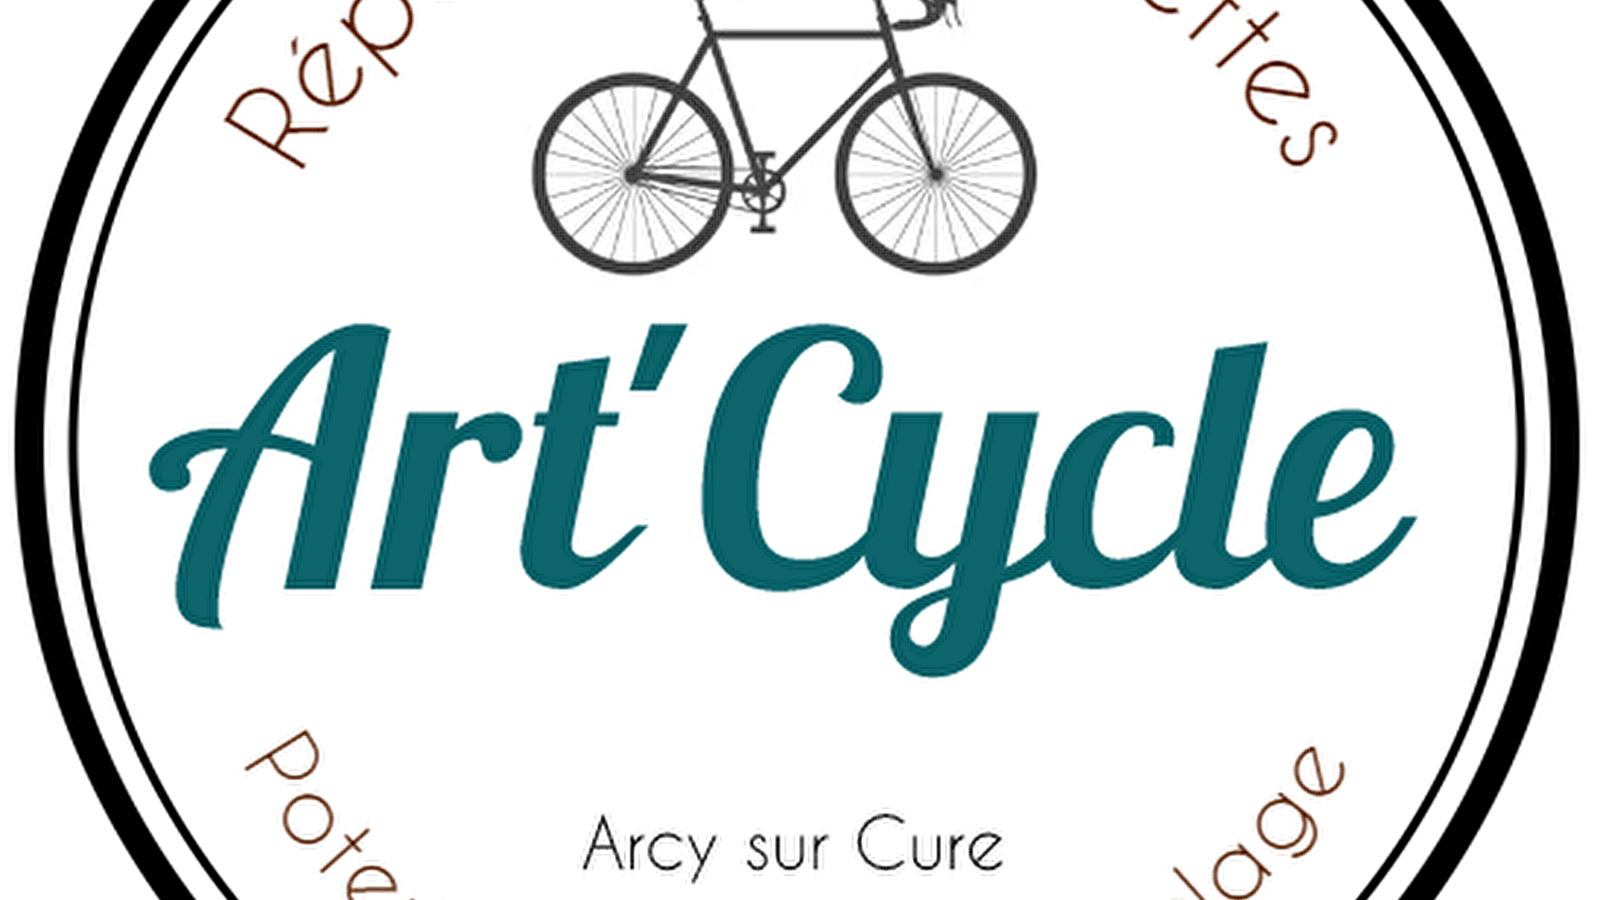 Art Cycle